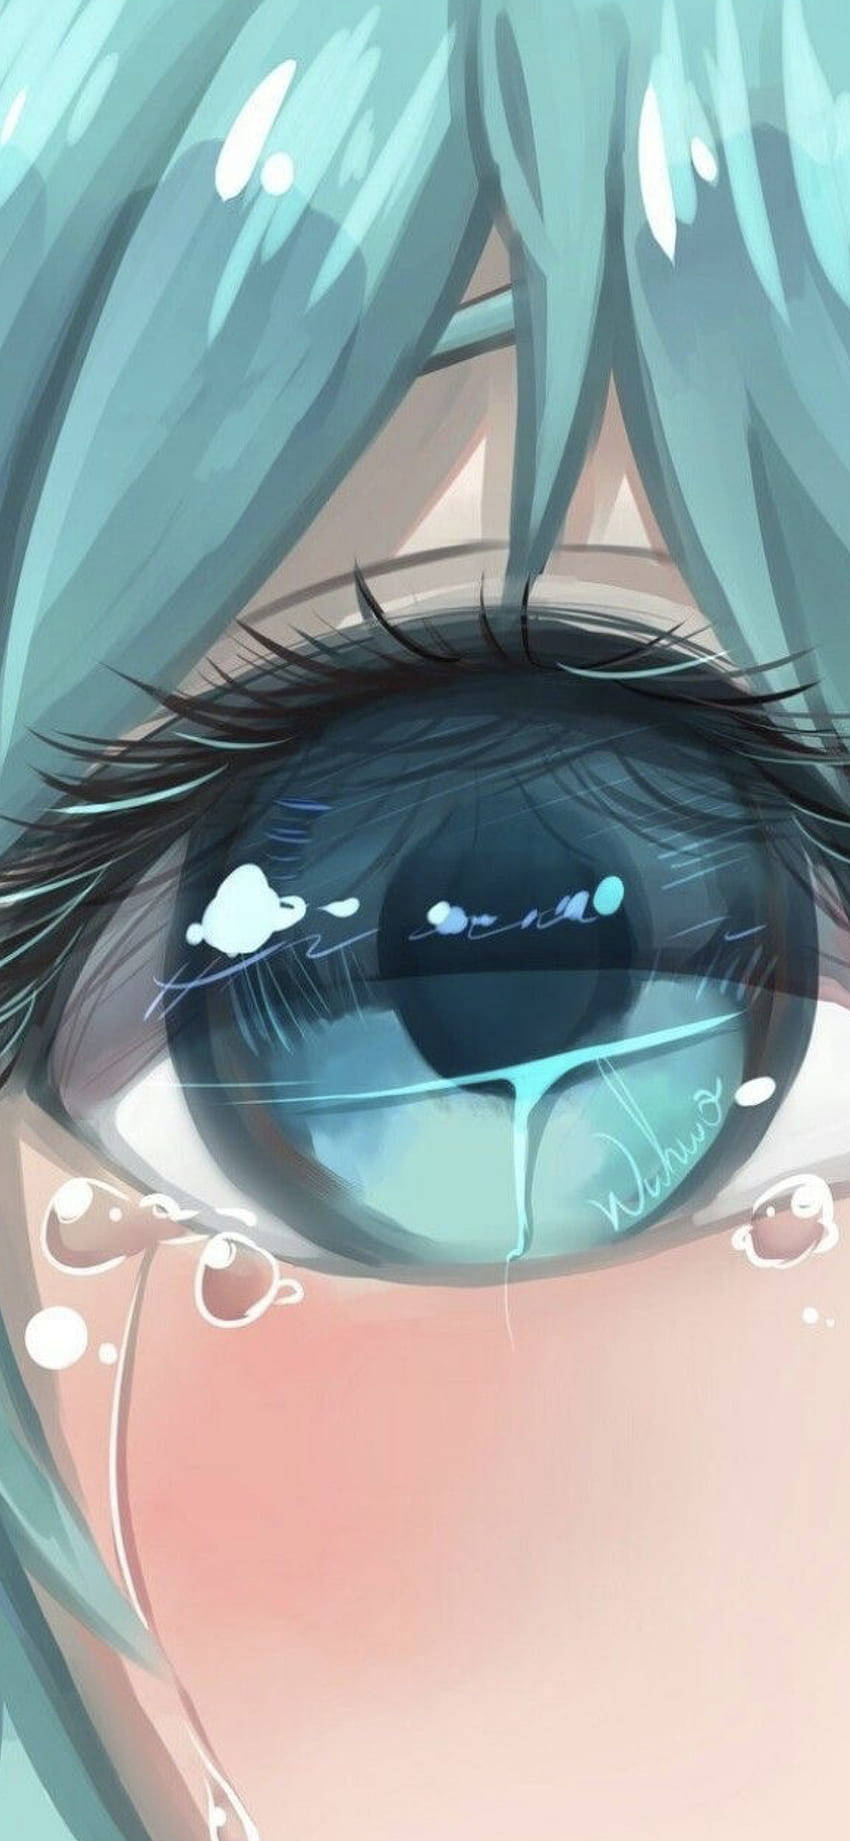 How to draw sad anime eyes easy  YouTube